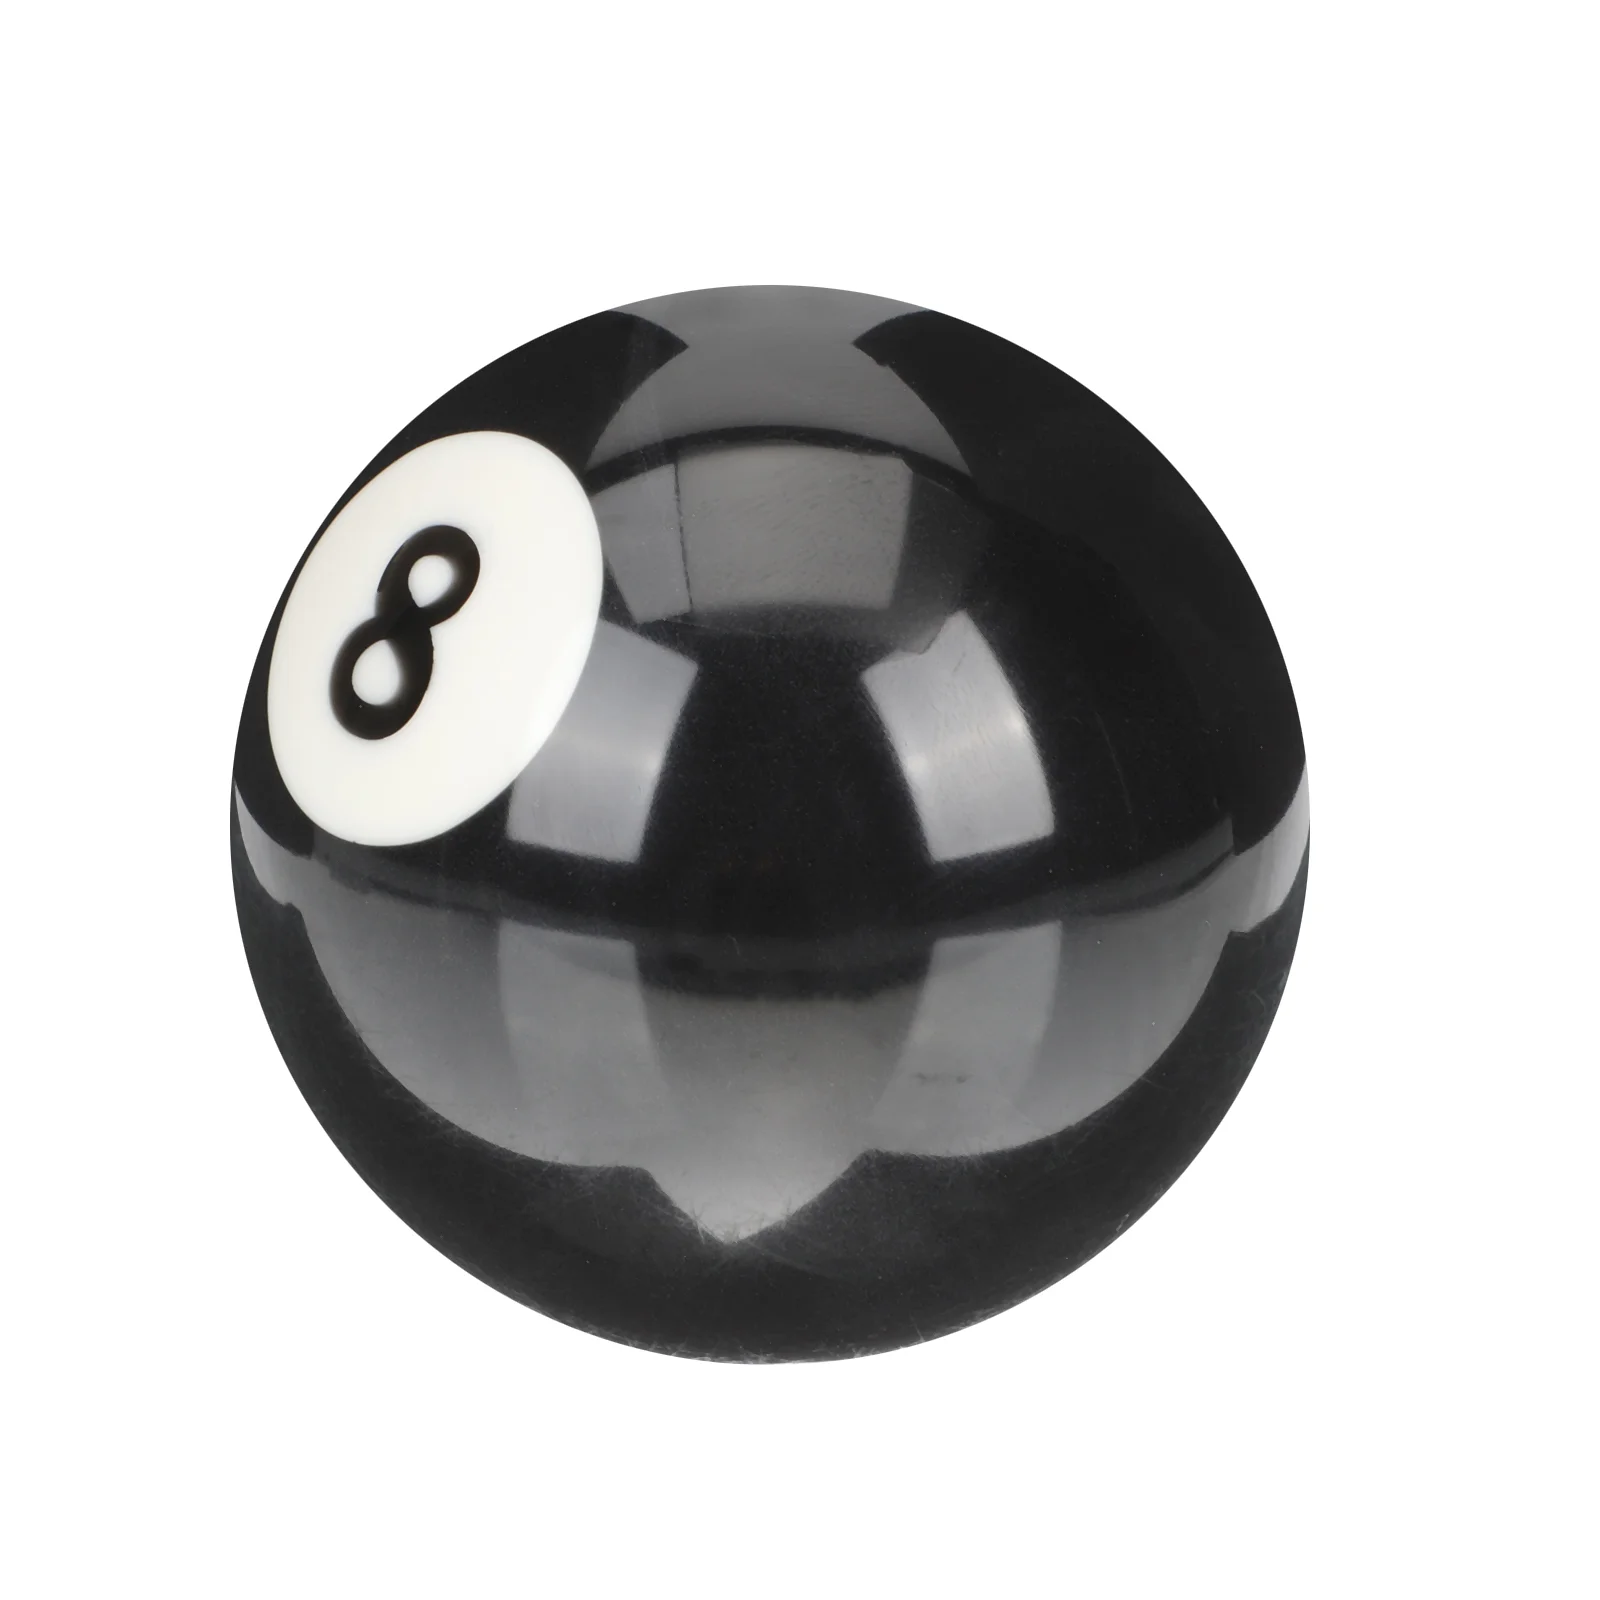 

Replacement Pool Cue Ball Billiard Cue Free Shipping Practice Training Cue Ball Standard Regular Black Ball #8 Billiard Cue